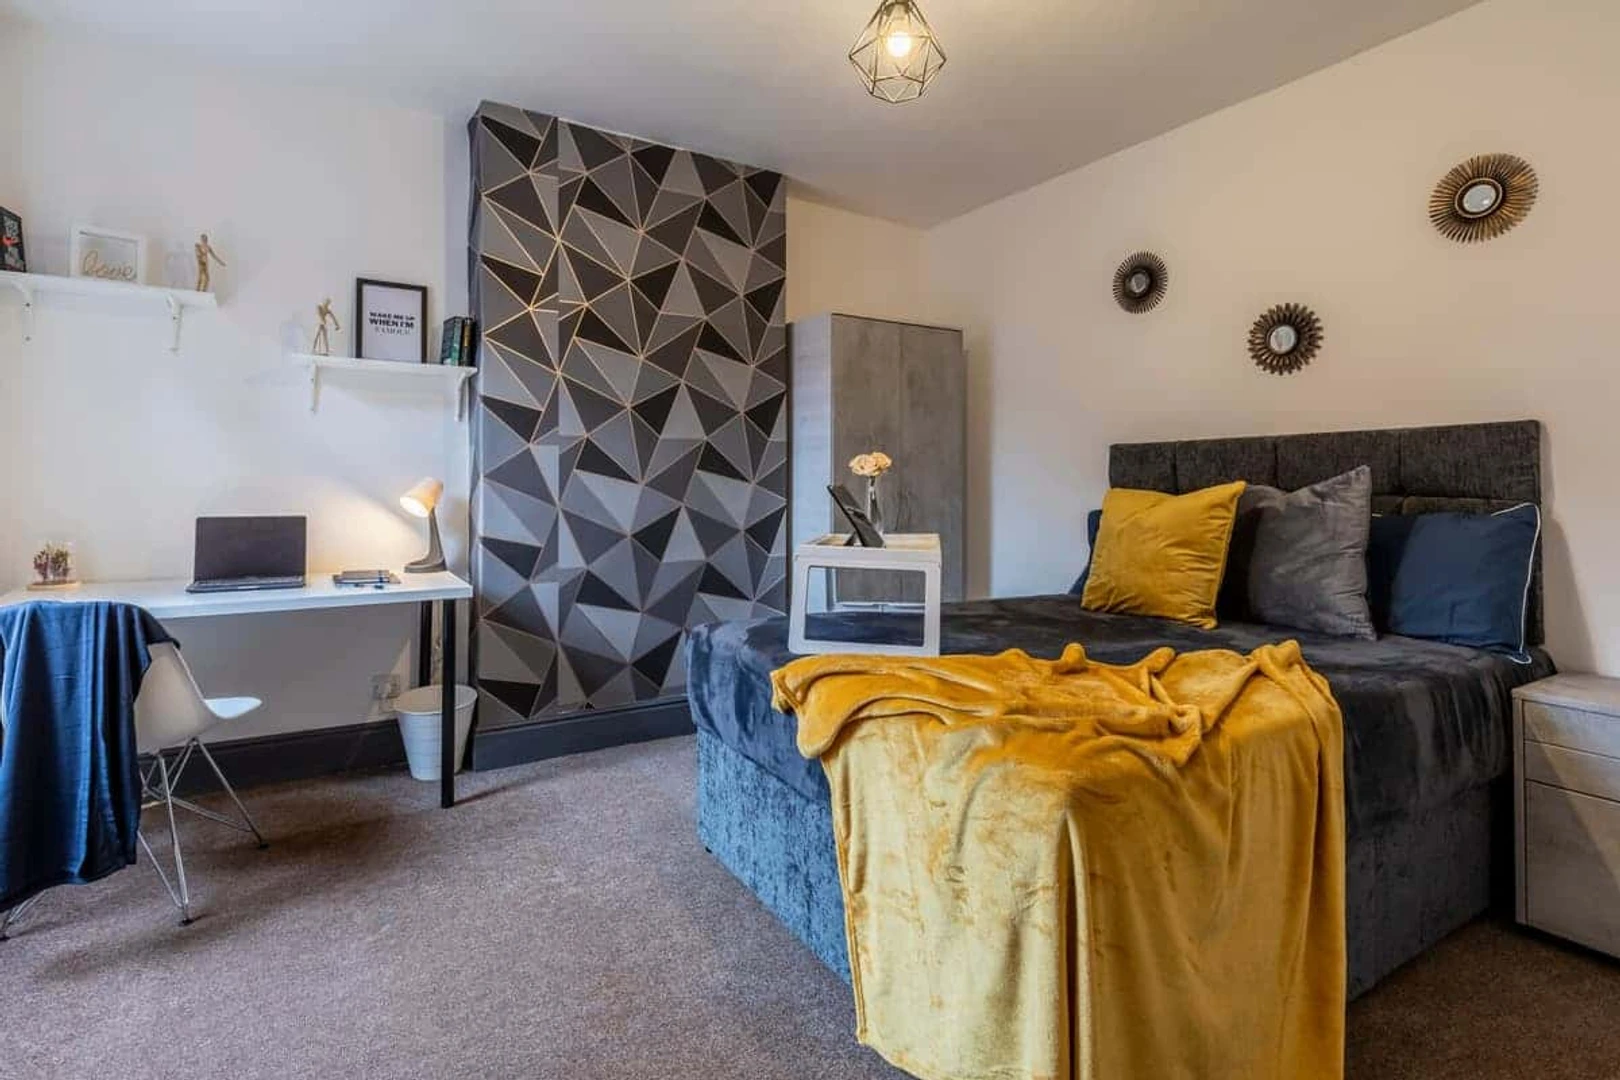 Alquiler de habitación en piso compartido en Leicester